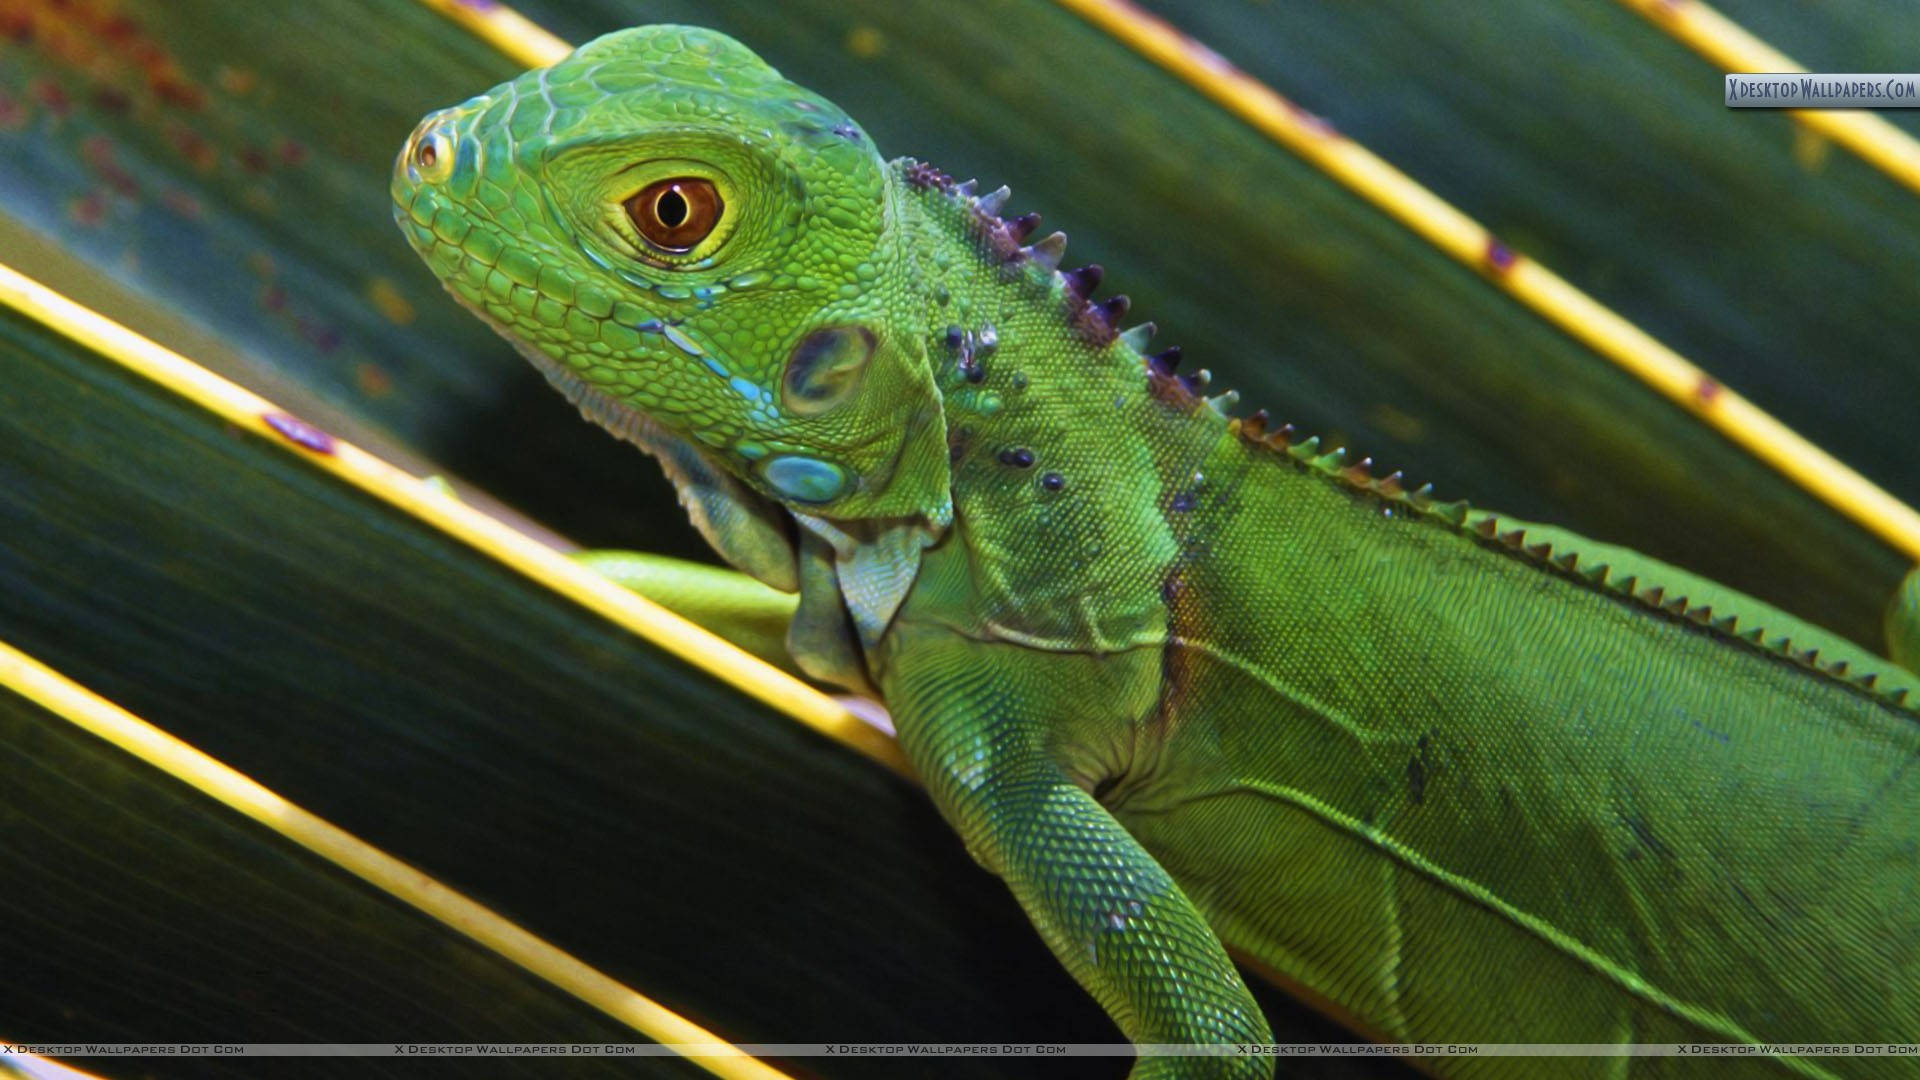 Vibrant Green Iguana Lounging in its Natural Habitat Wallpaper